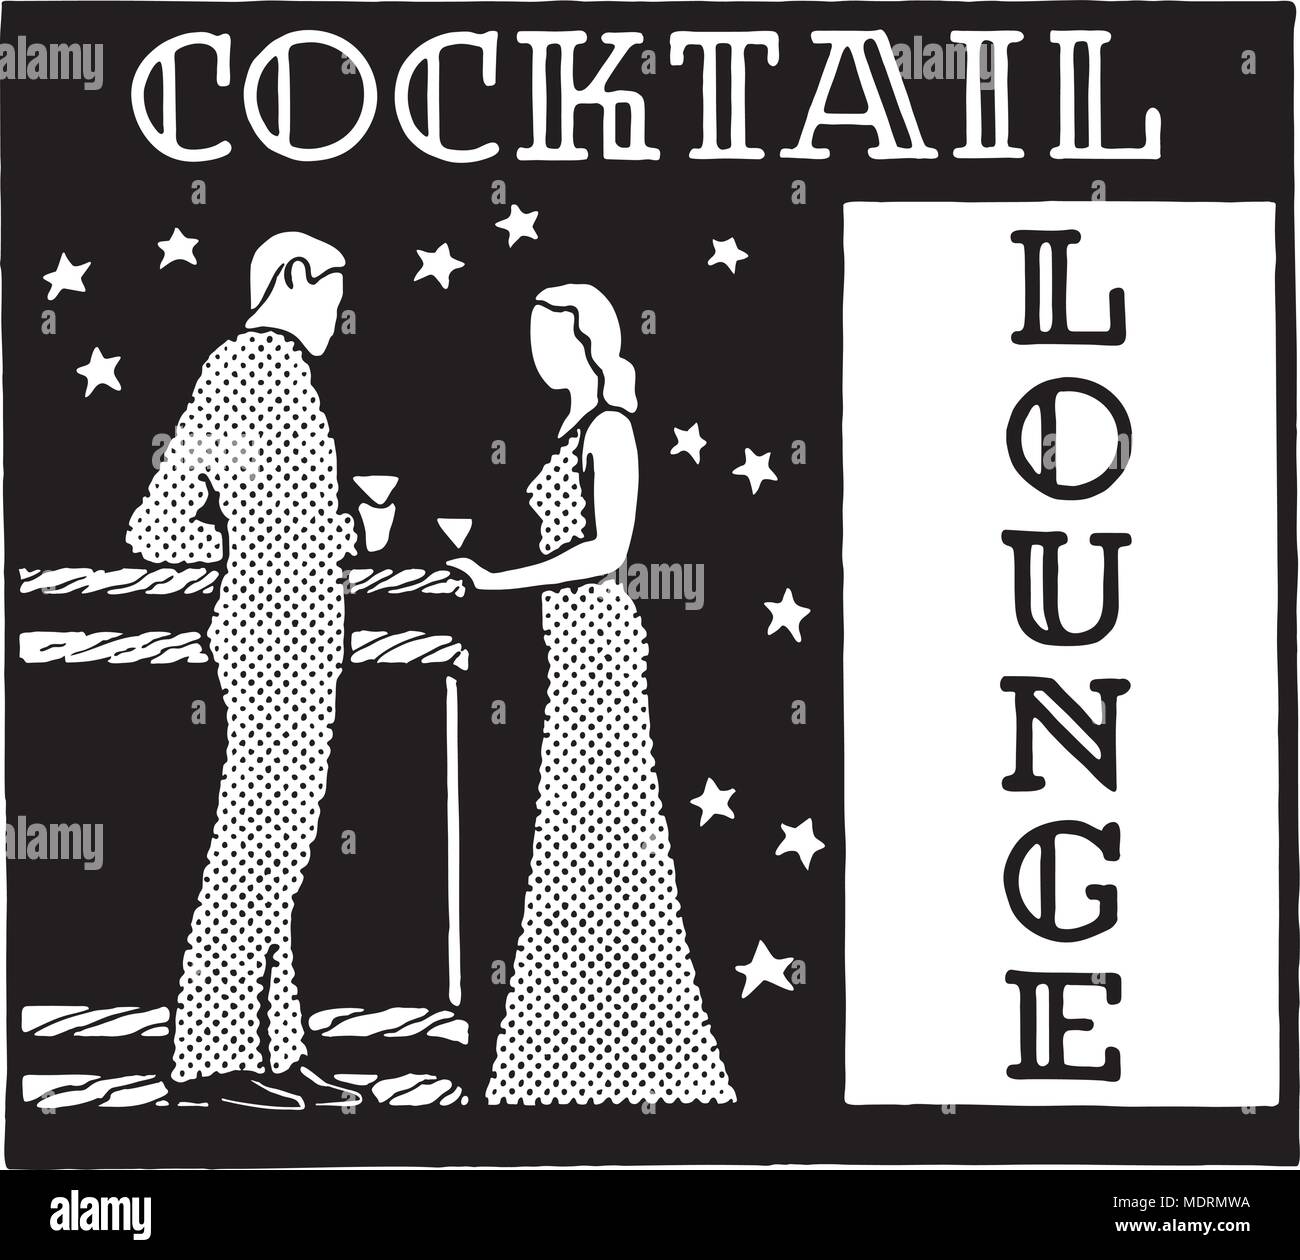 Cocktail Lounge 3 - Retro Ad Kunst Banner Stock Vektor